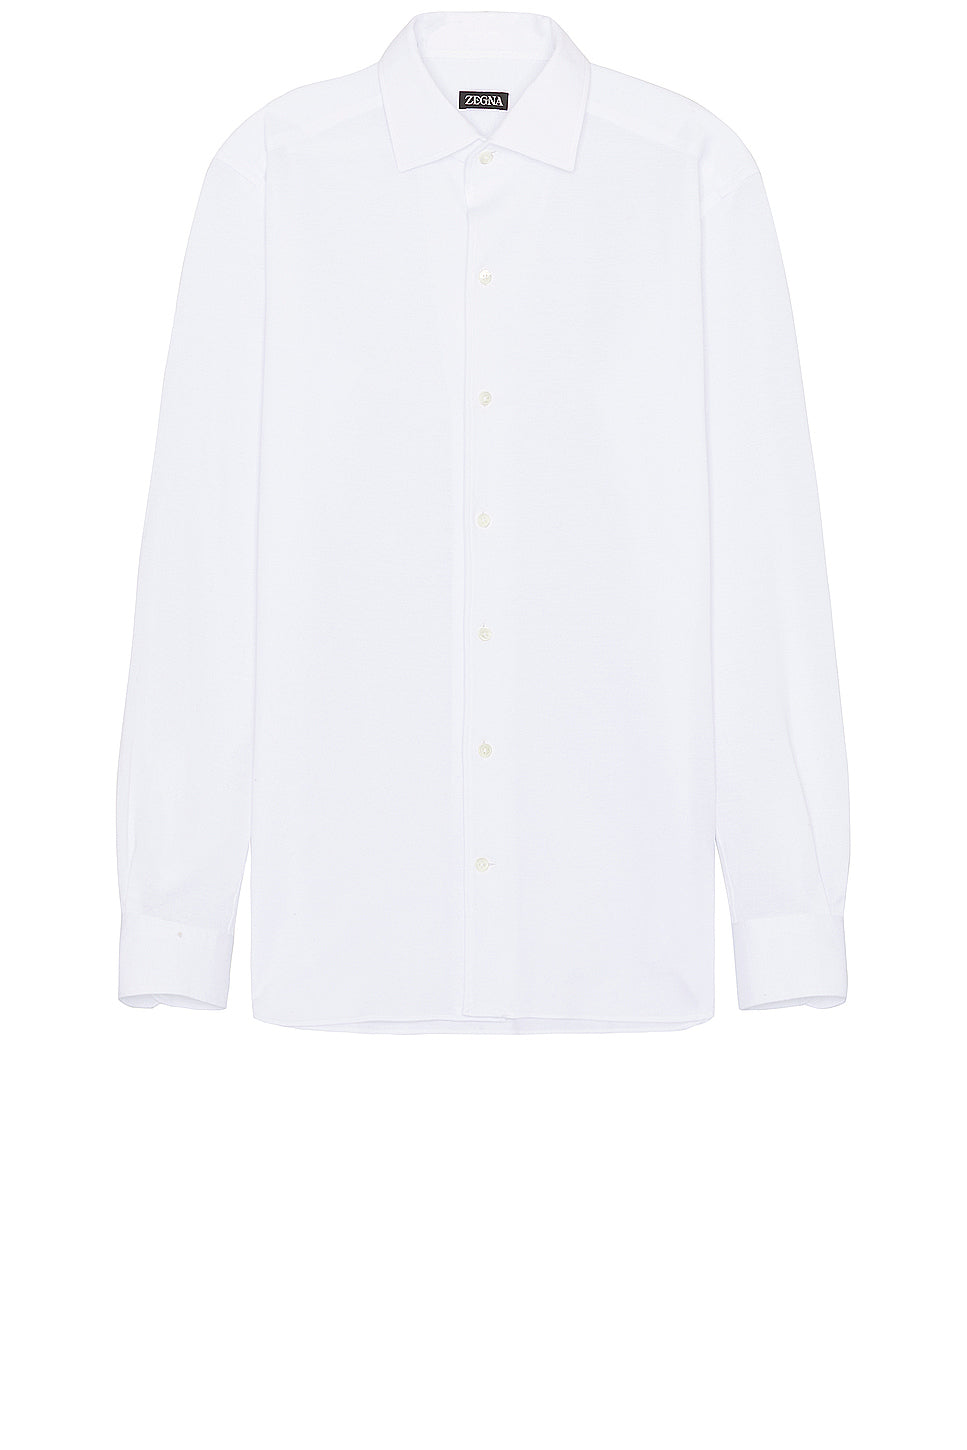 Pure Cotton Jersey Long Sleeve Button Down Shirt